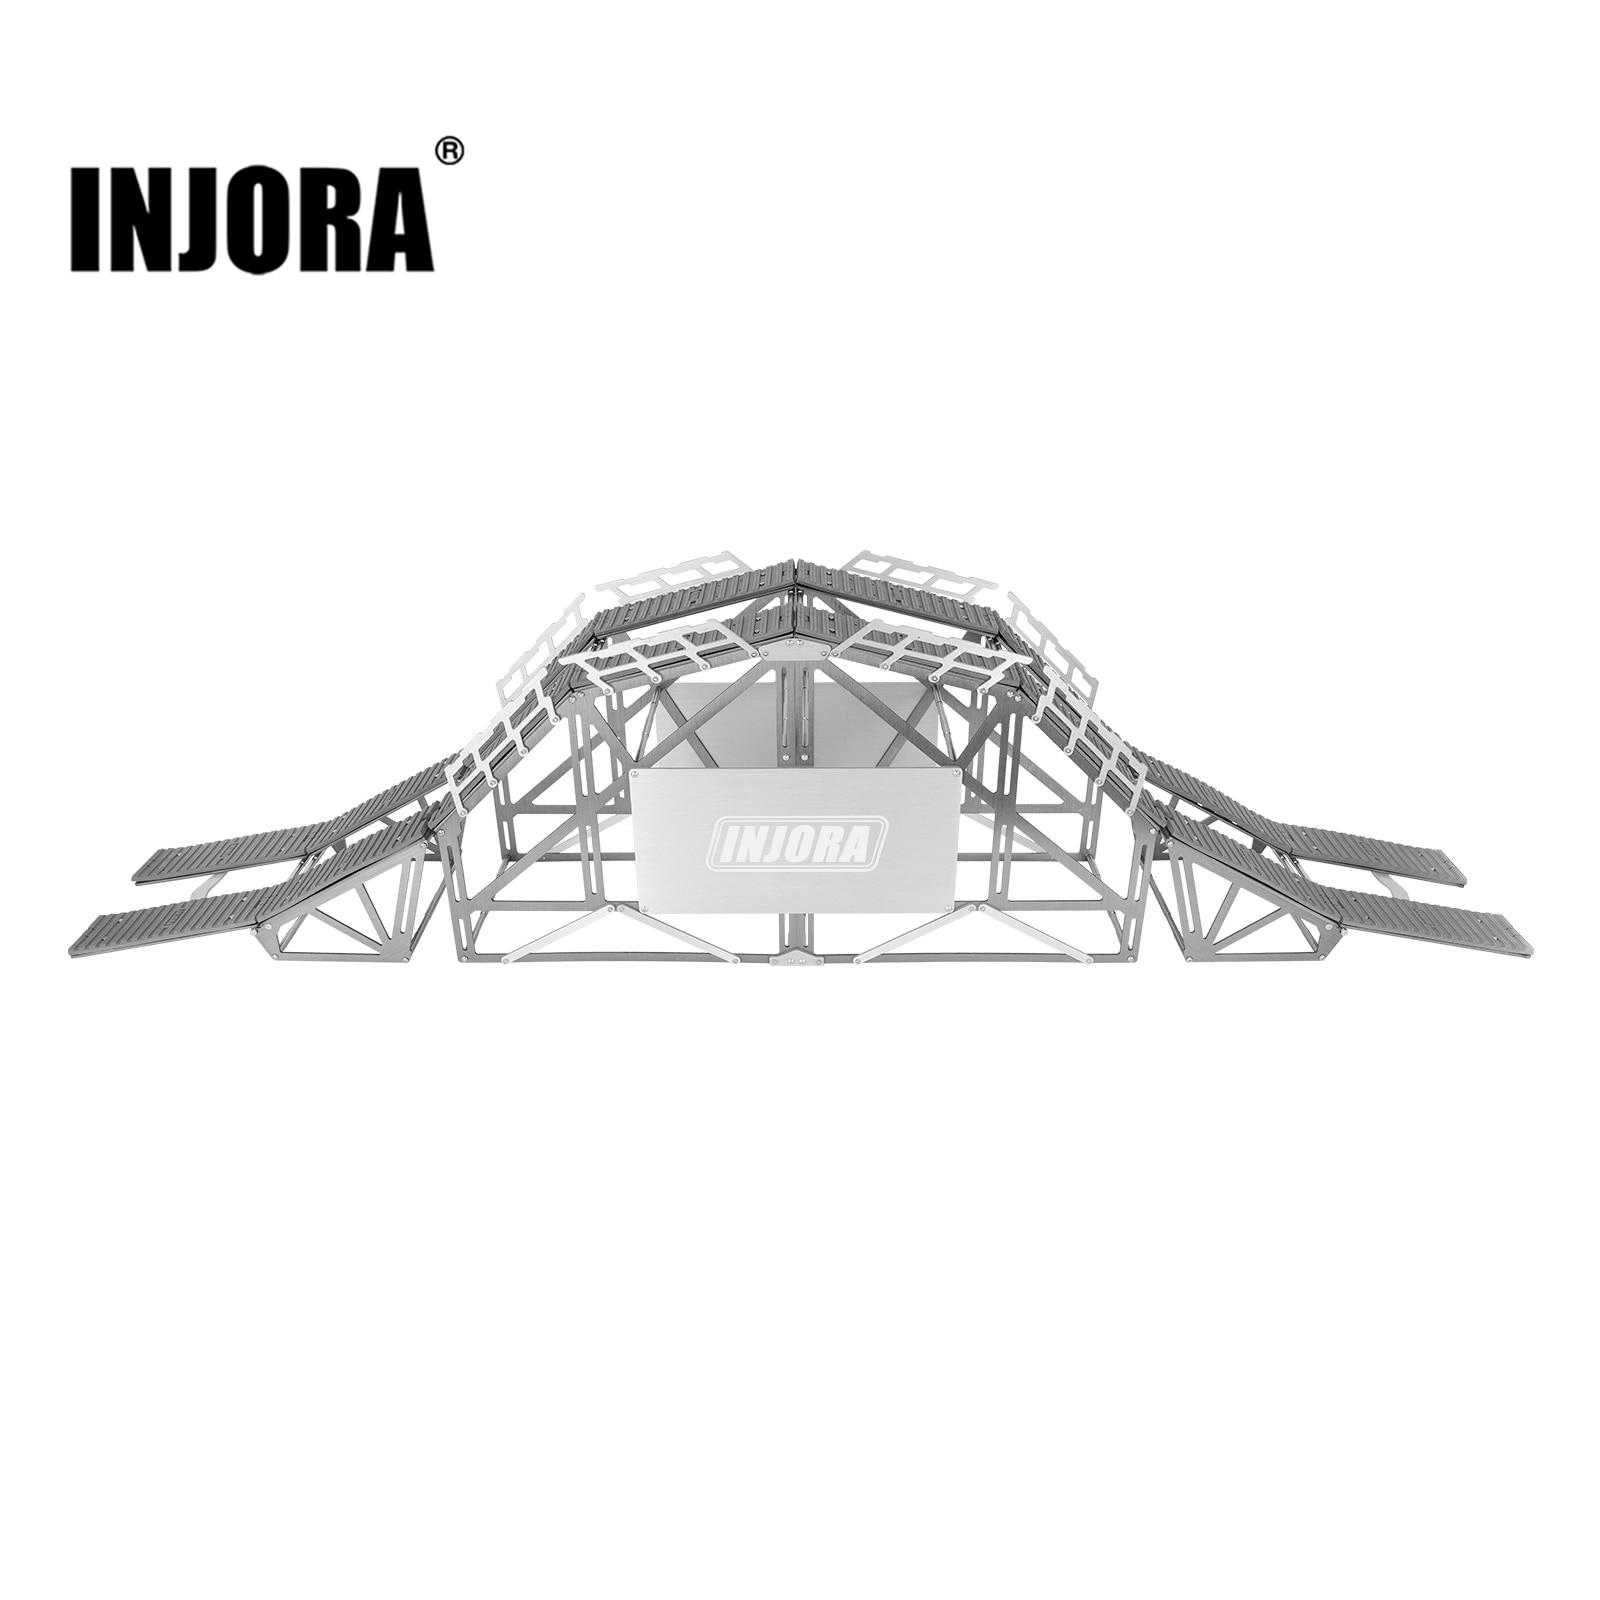 INJORA-Bridge-Course-Obstacle-Kit-for-1-18-1-24-RC-Crawer-Car-SCX24-AX24-TRX4M.jpg